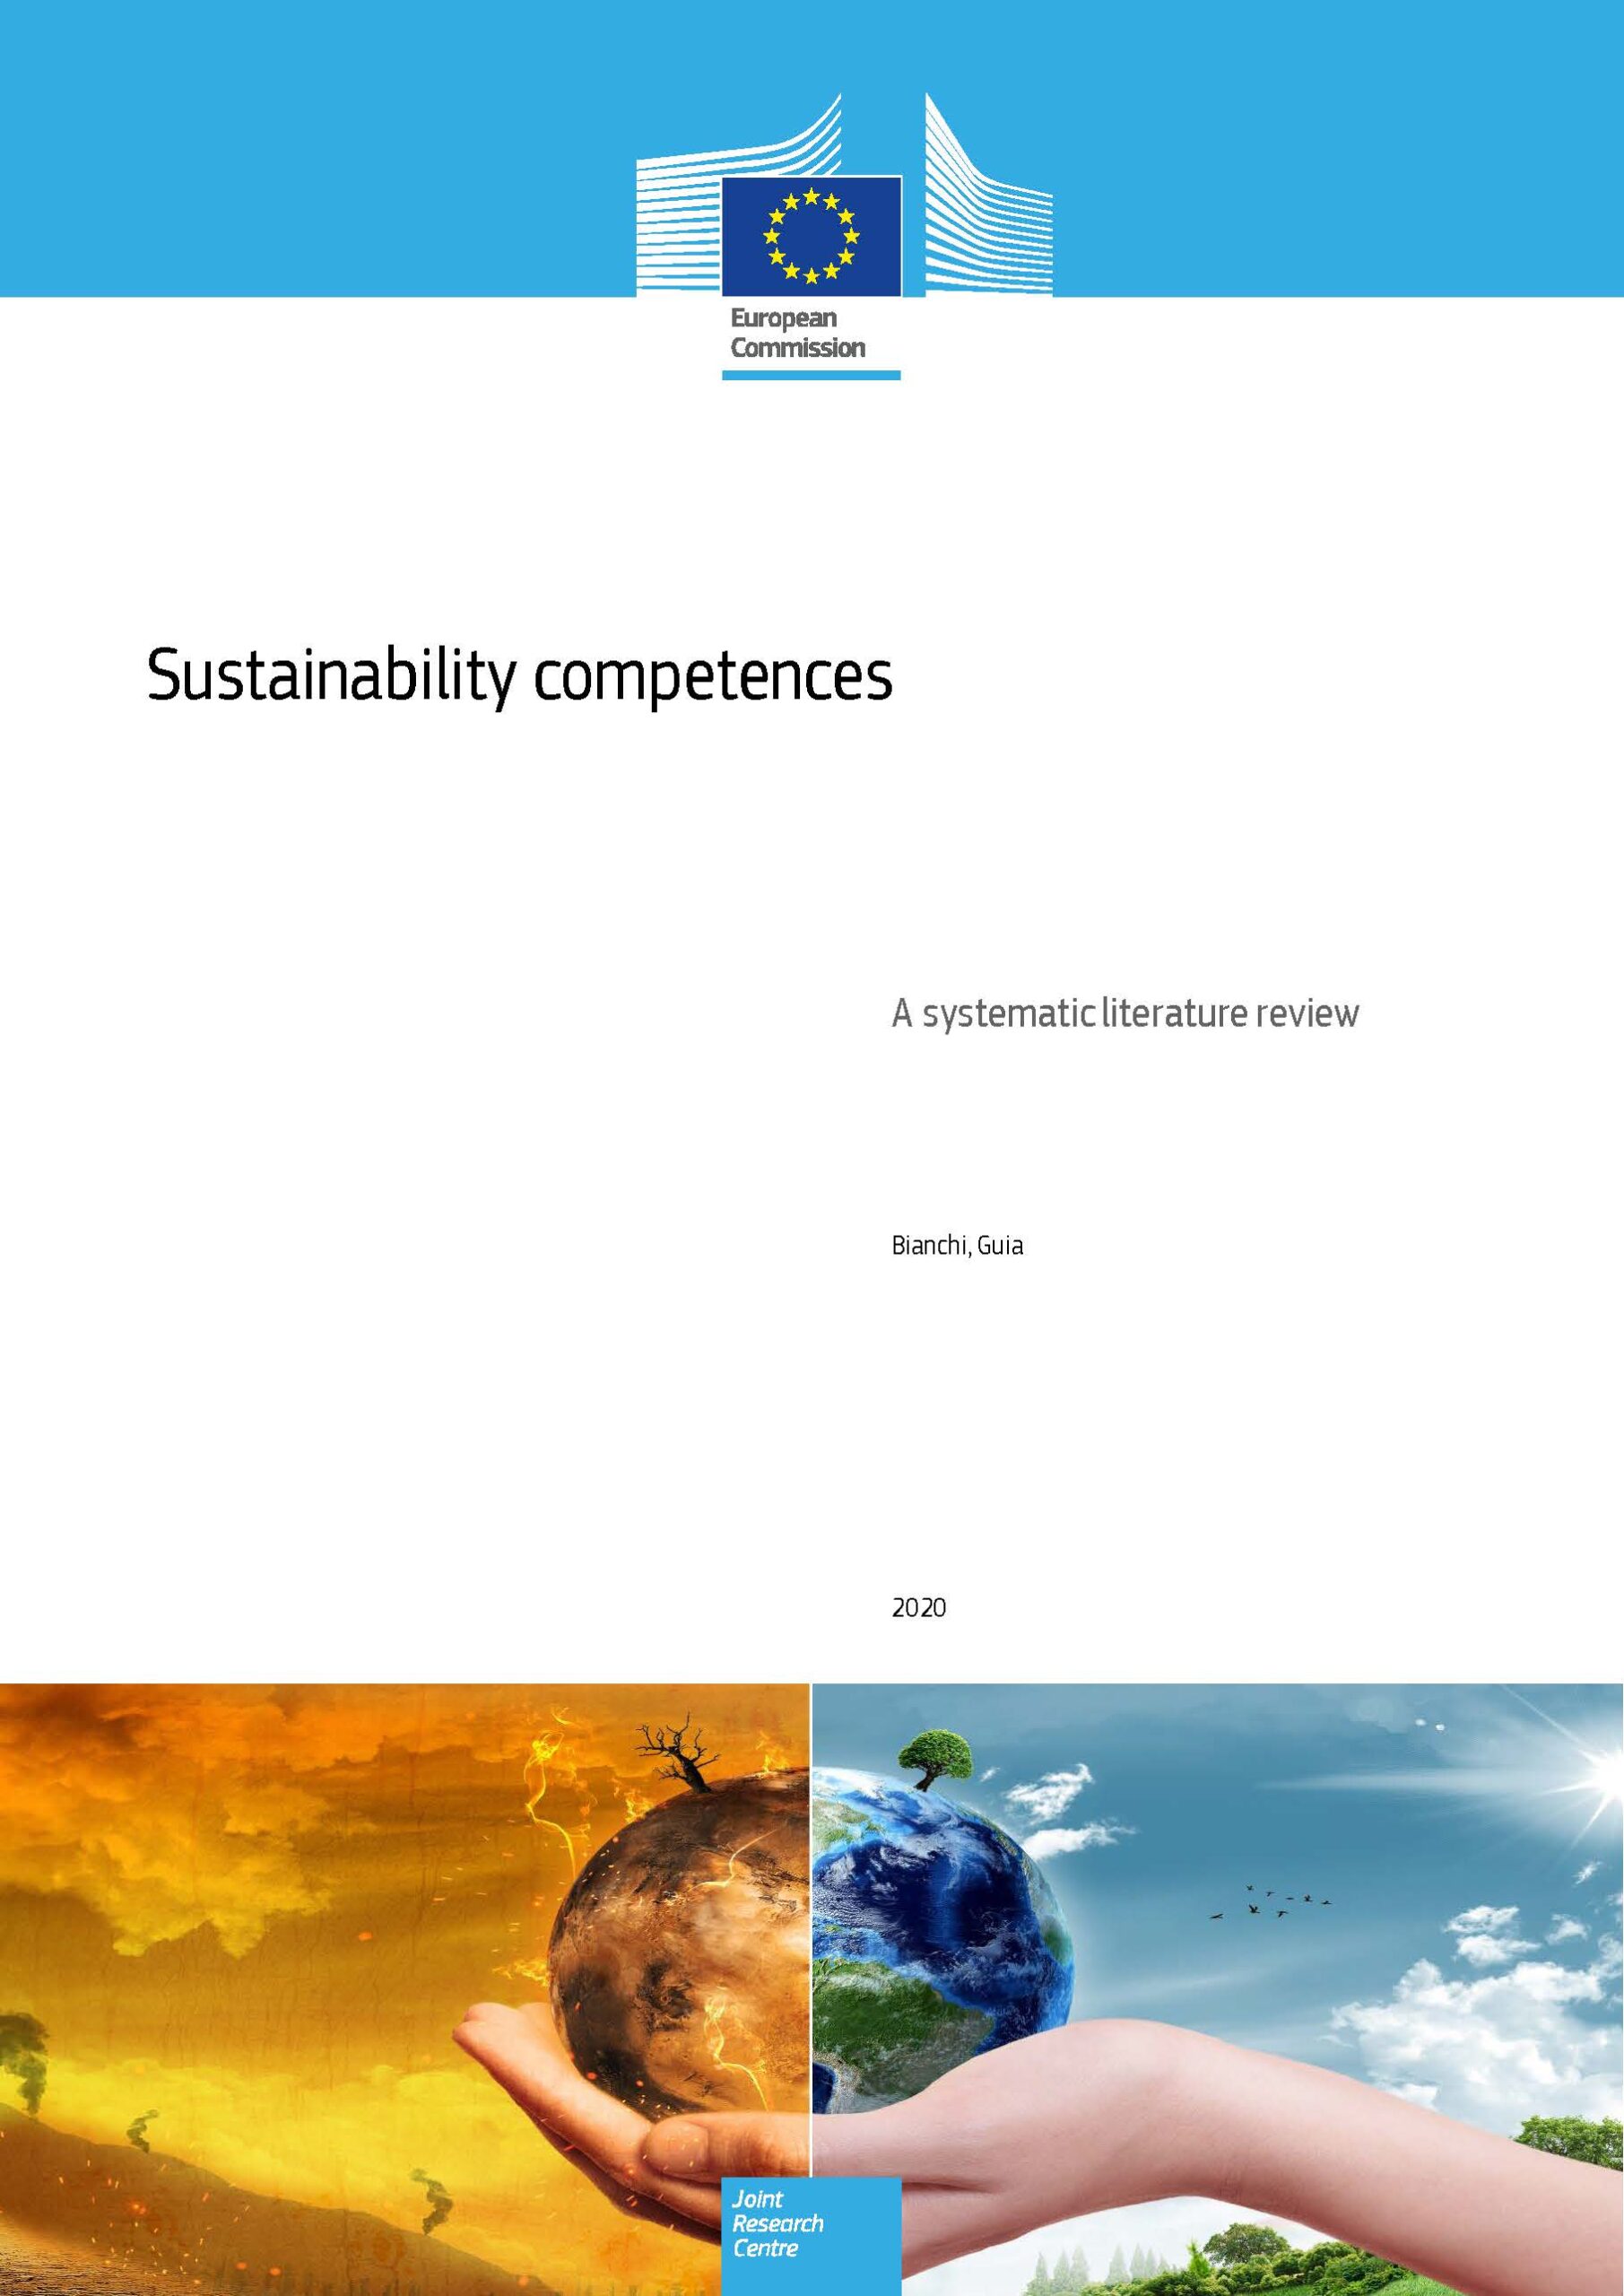 Forside af rapporten 'Sustainability competences'